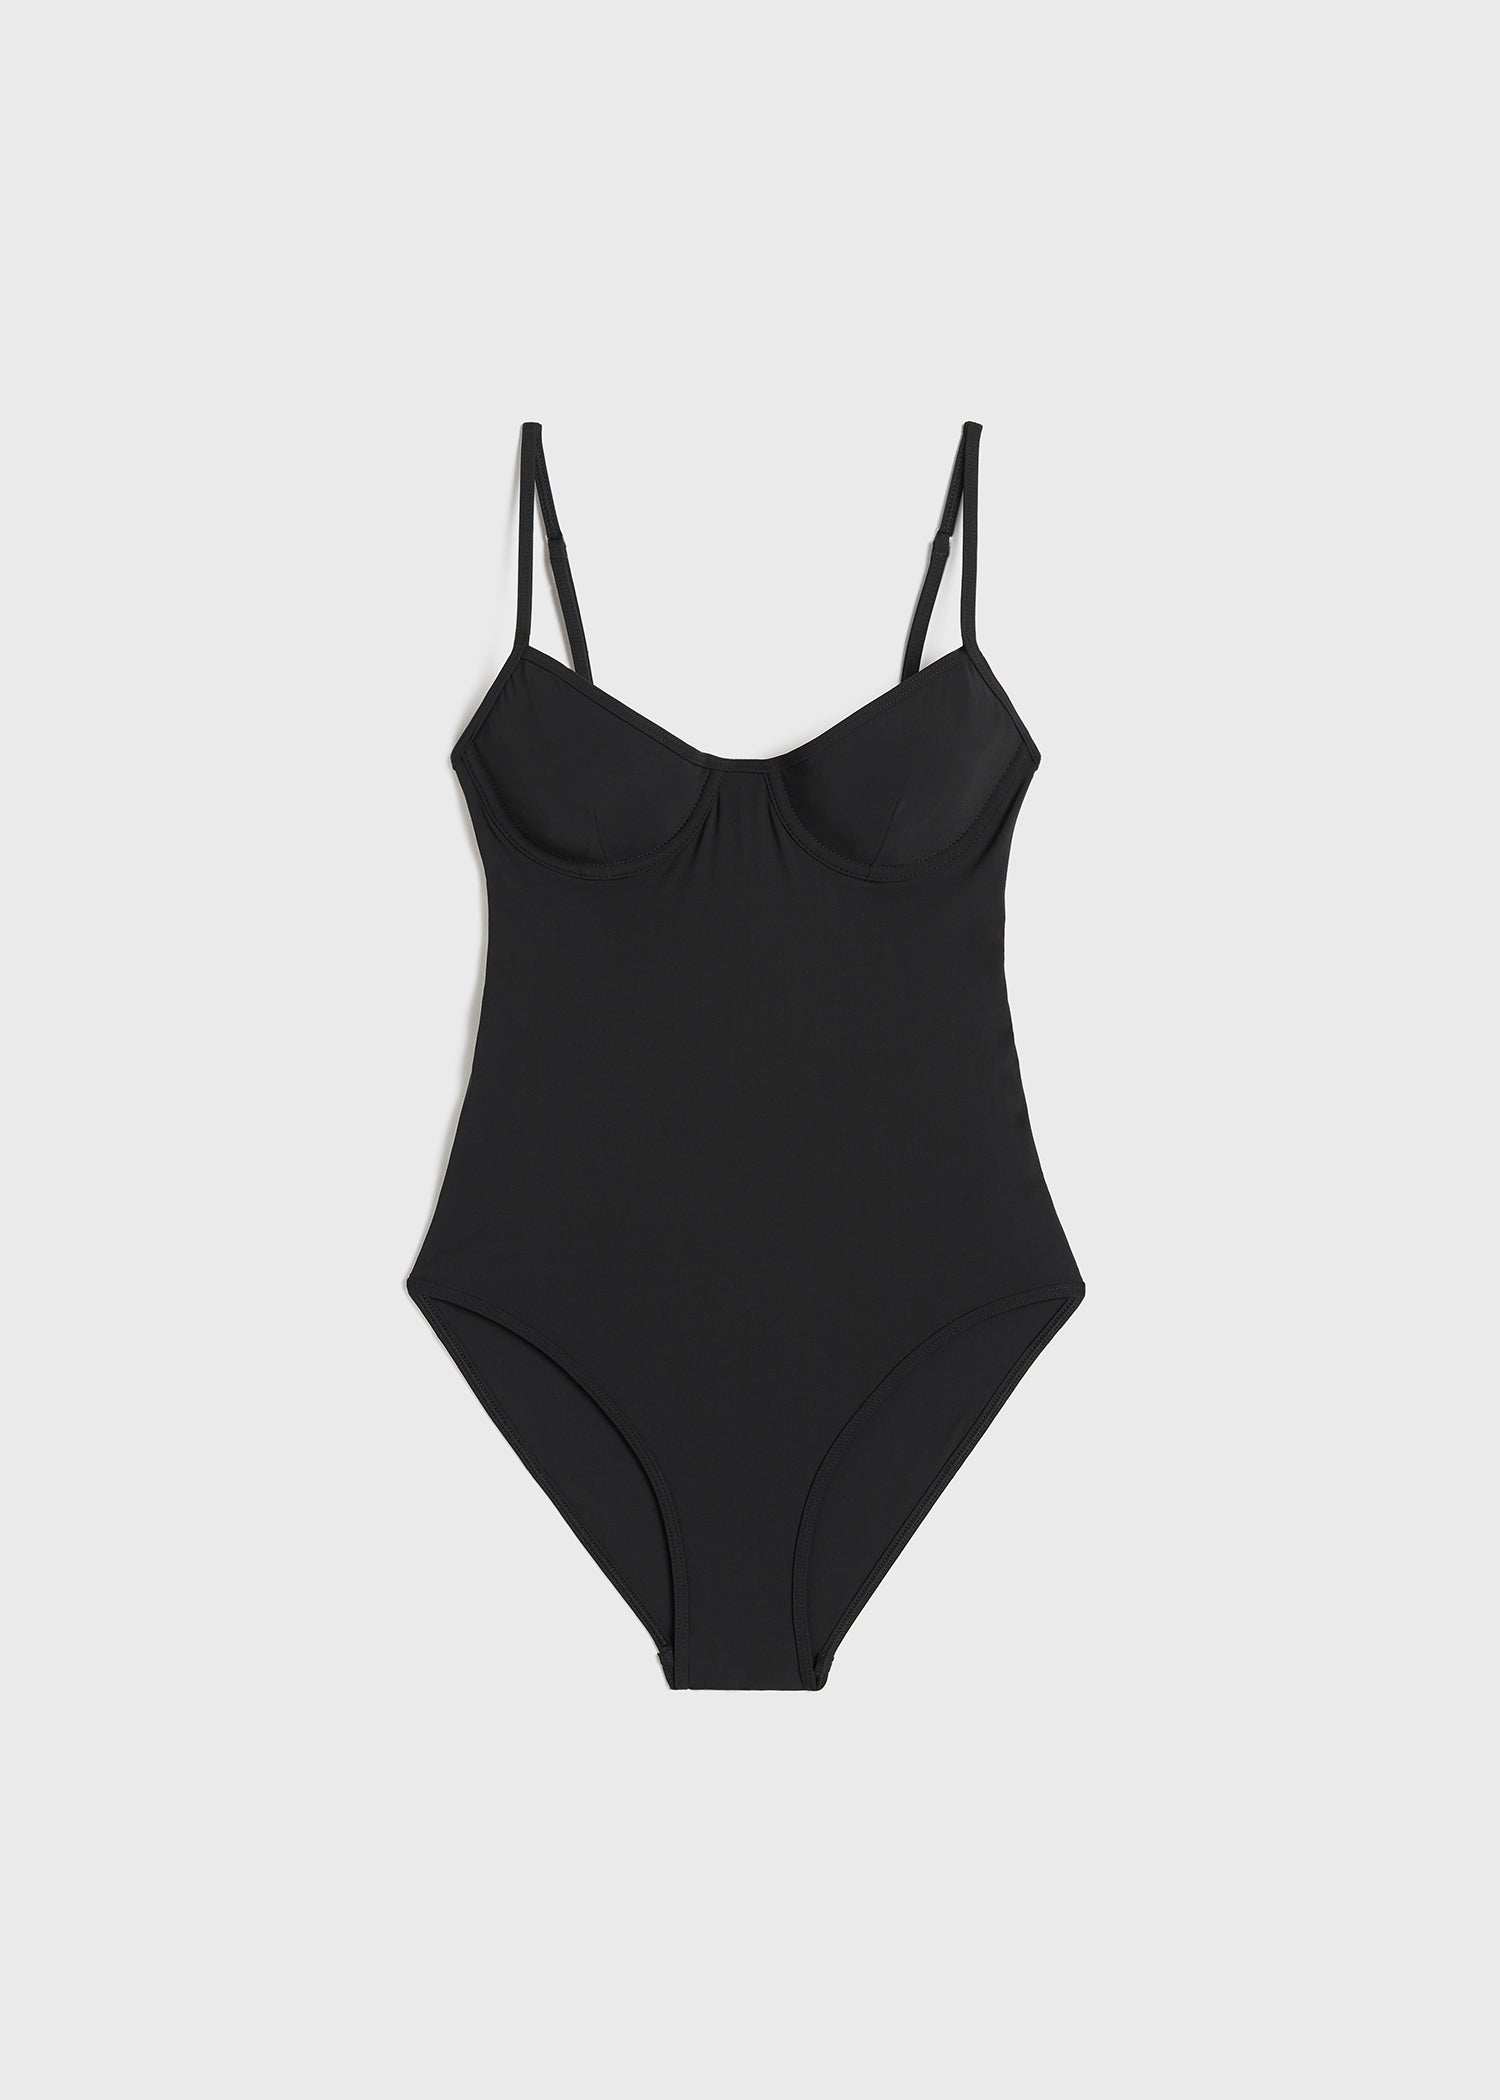 Half-cup swimsuit black